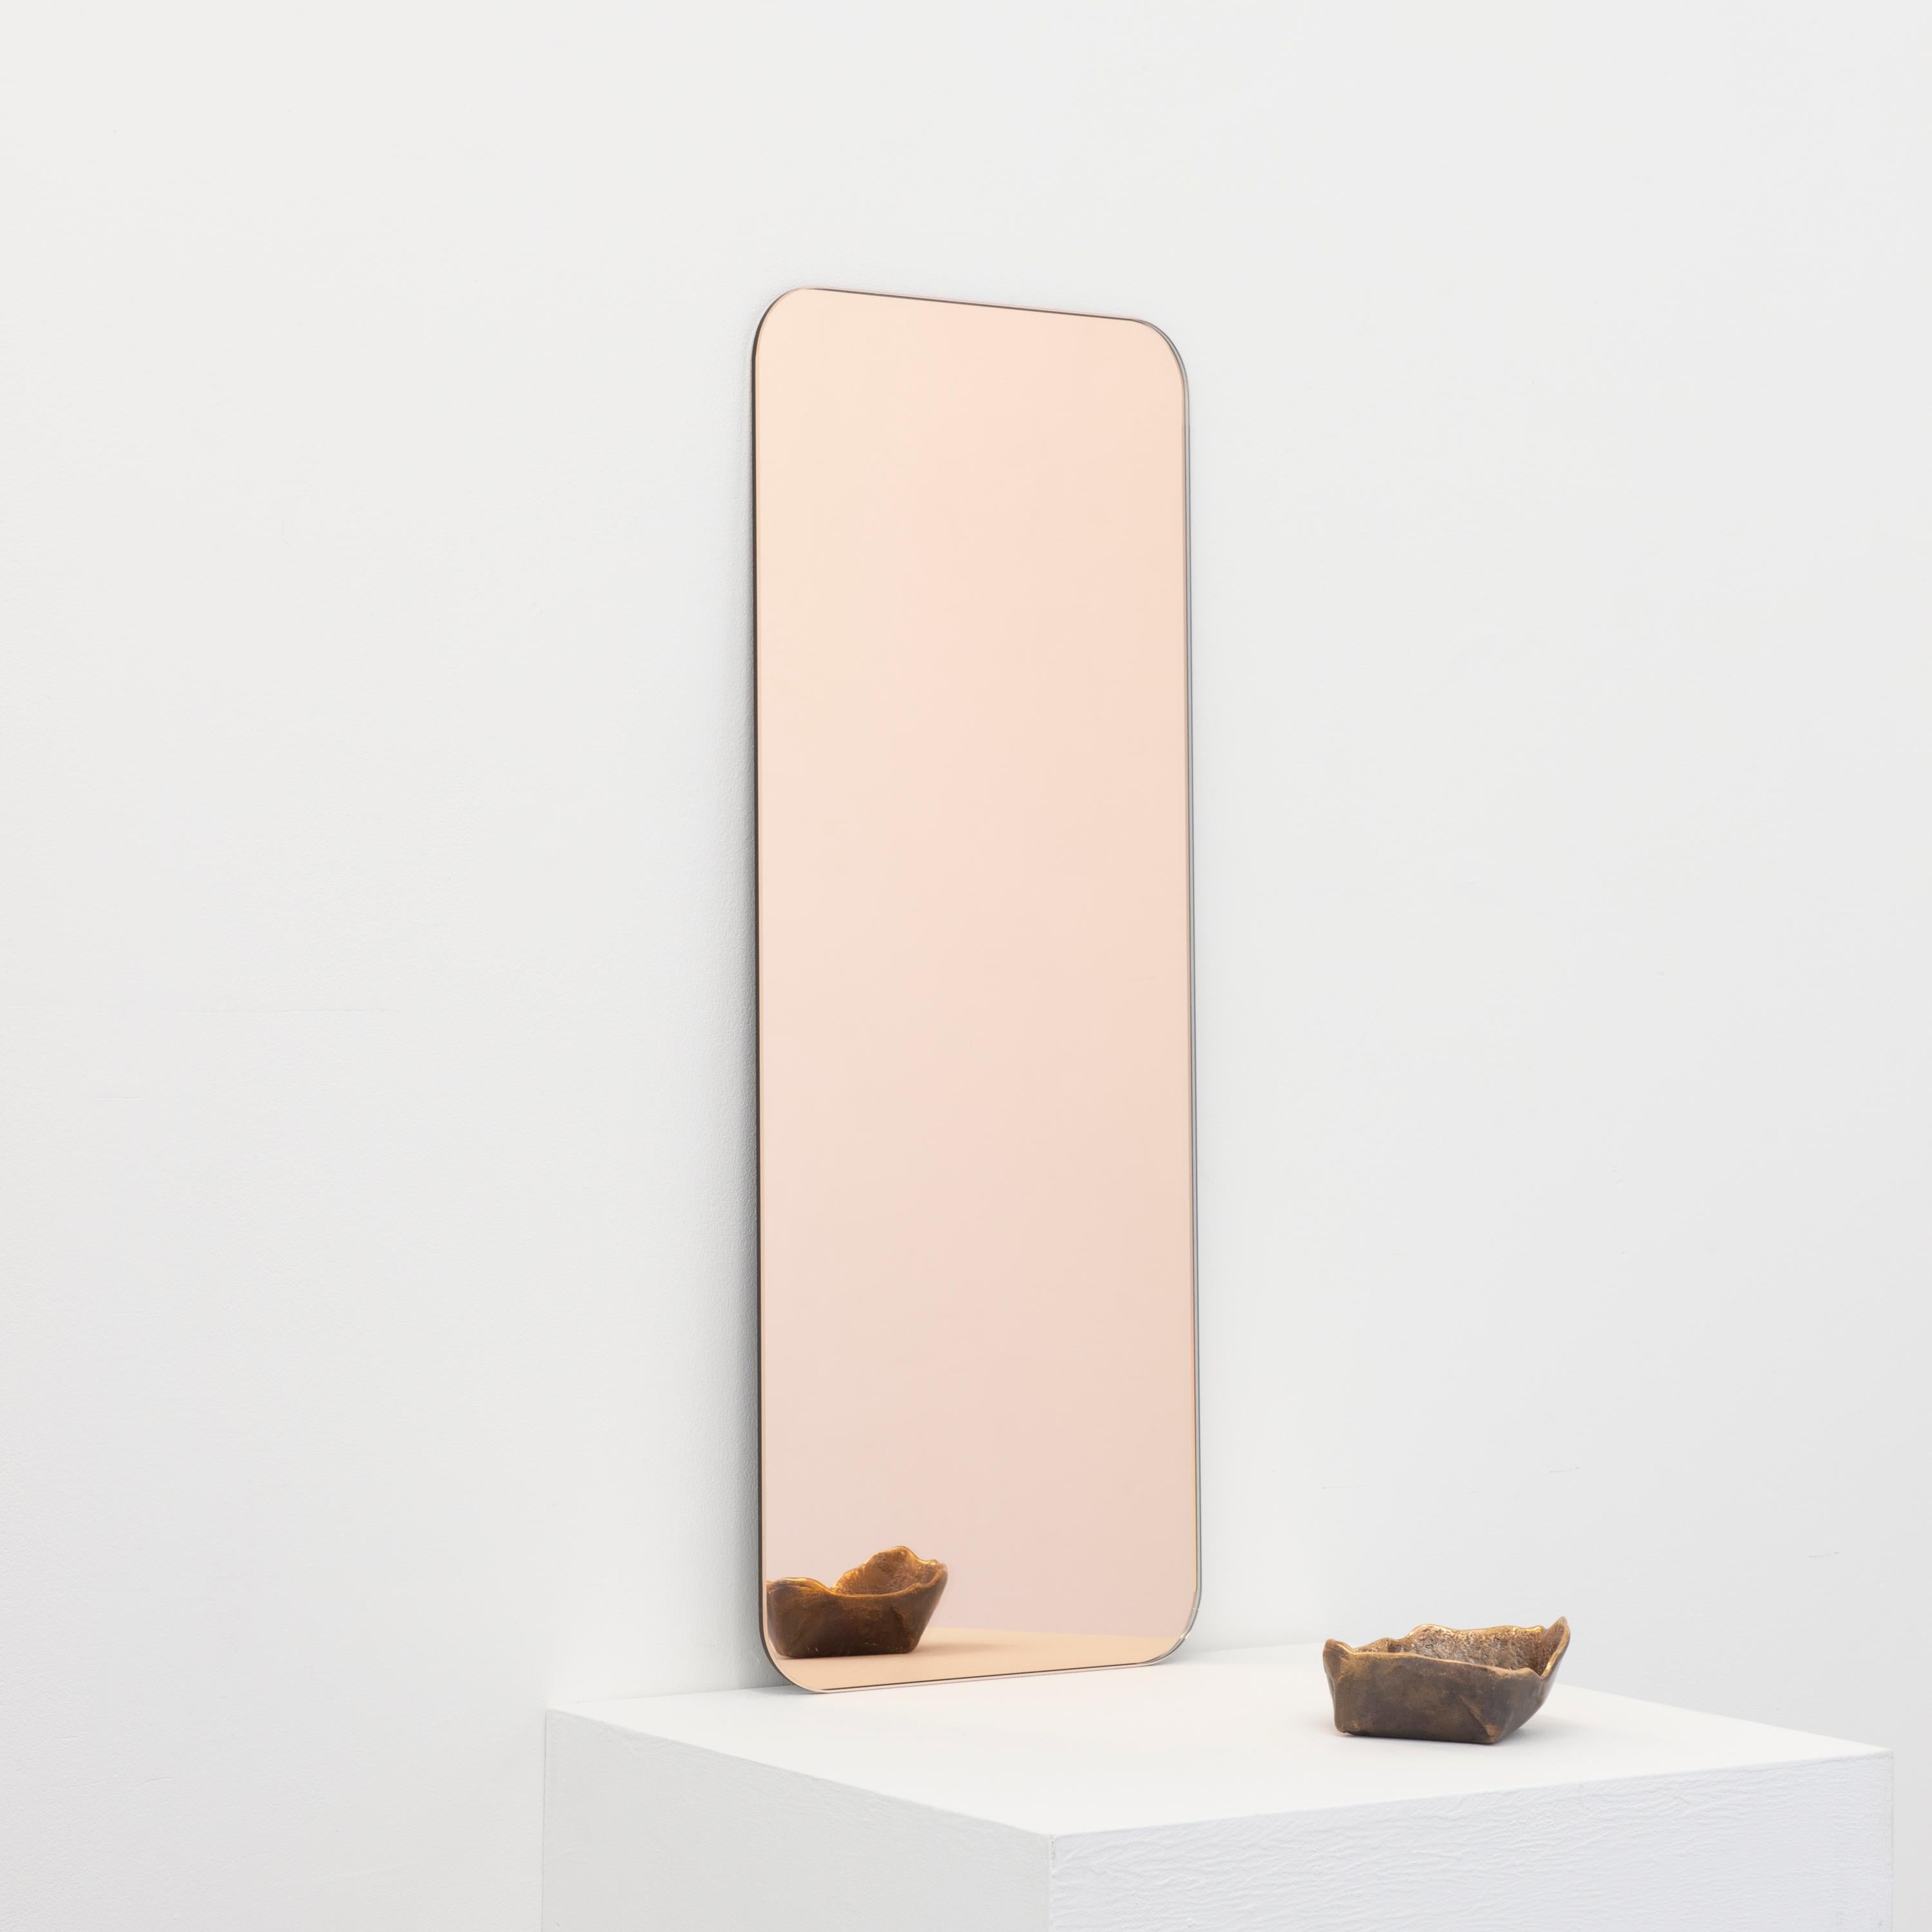 Quadris Rose Gold Rectangular Frameless Modern Mirror, Medium In New Condition For Sale In London, GB